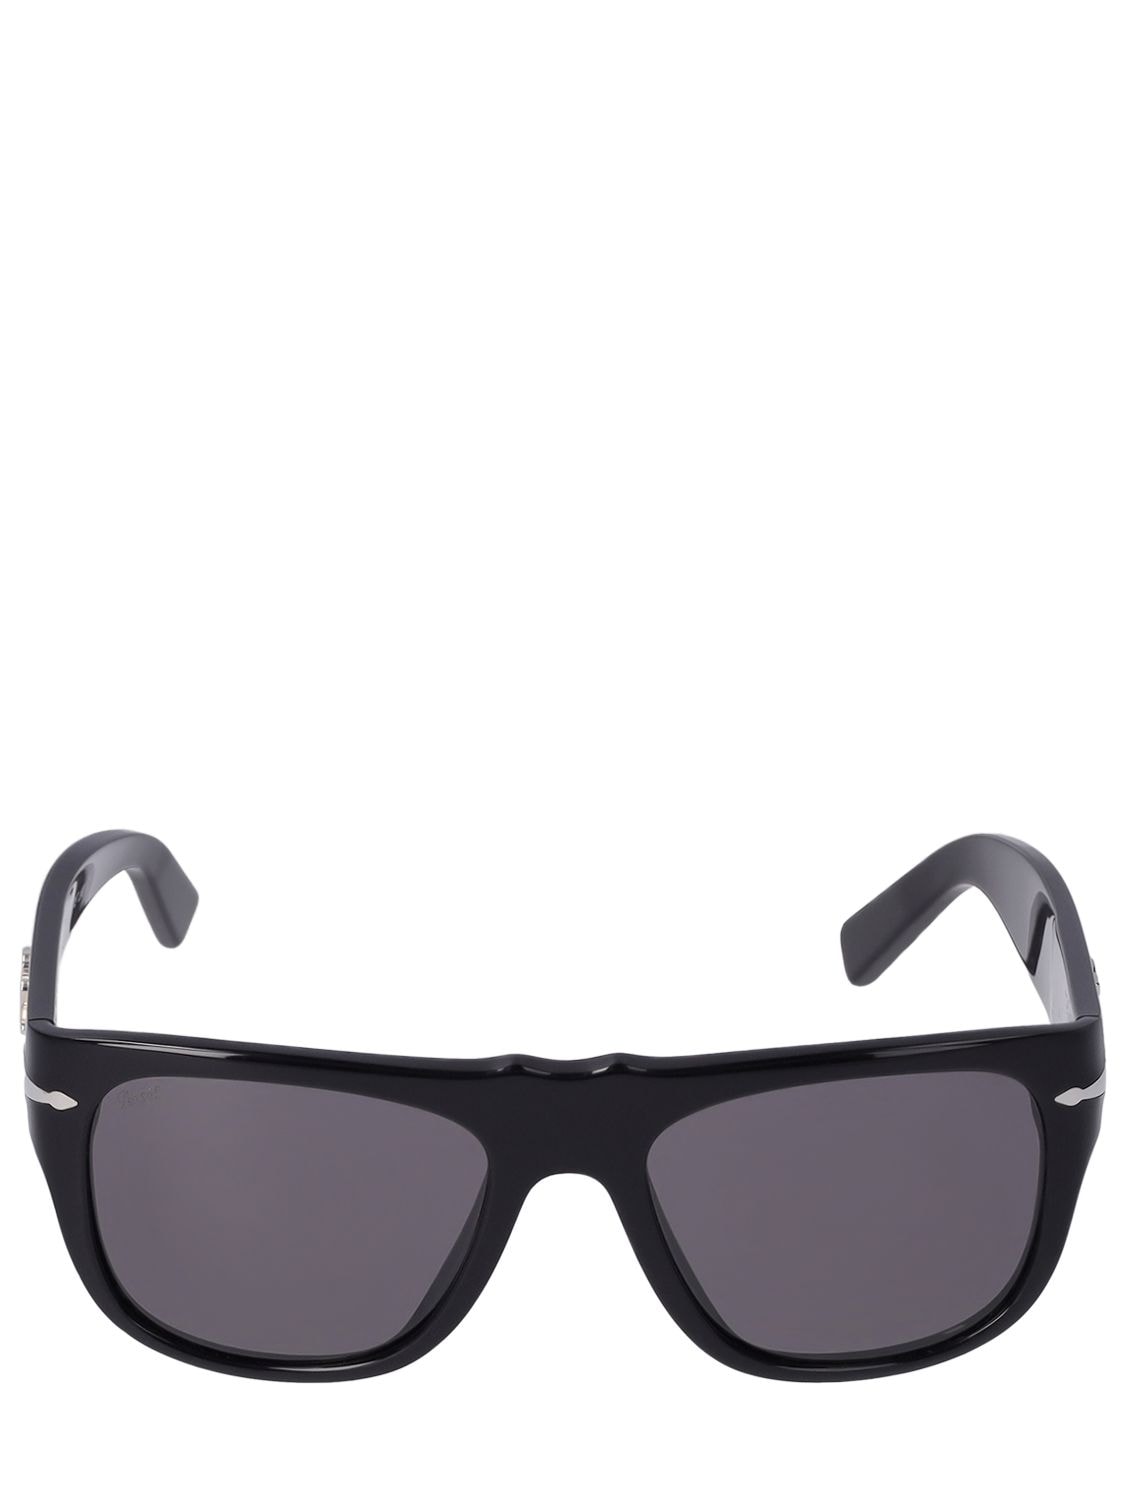 Dolce & Gabbana - Sonnenbrille aus acetat „d&g x persol“ - Schwarz/Grau